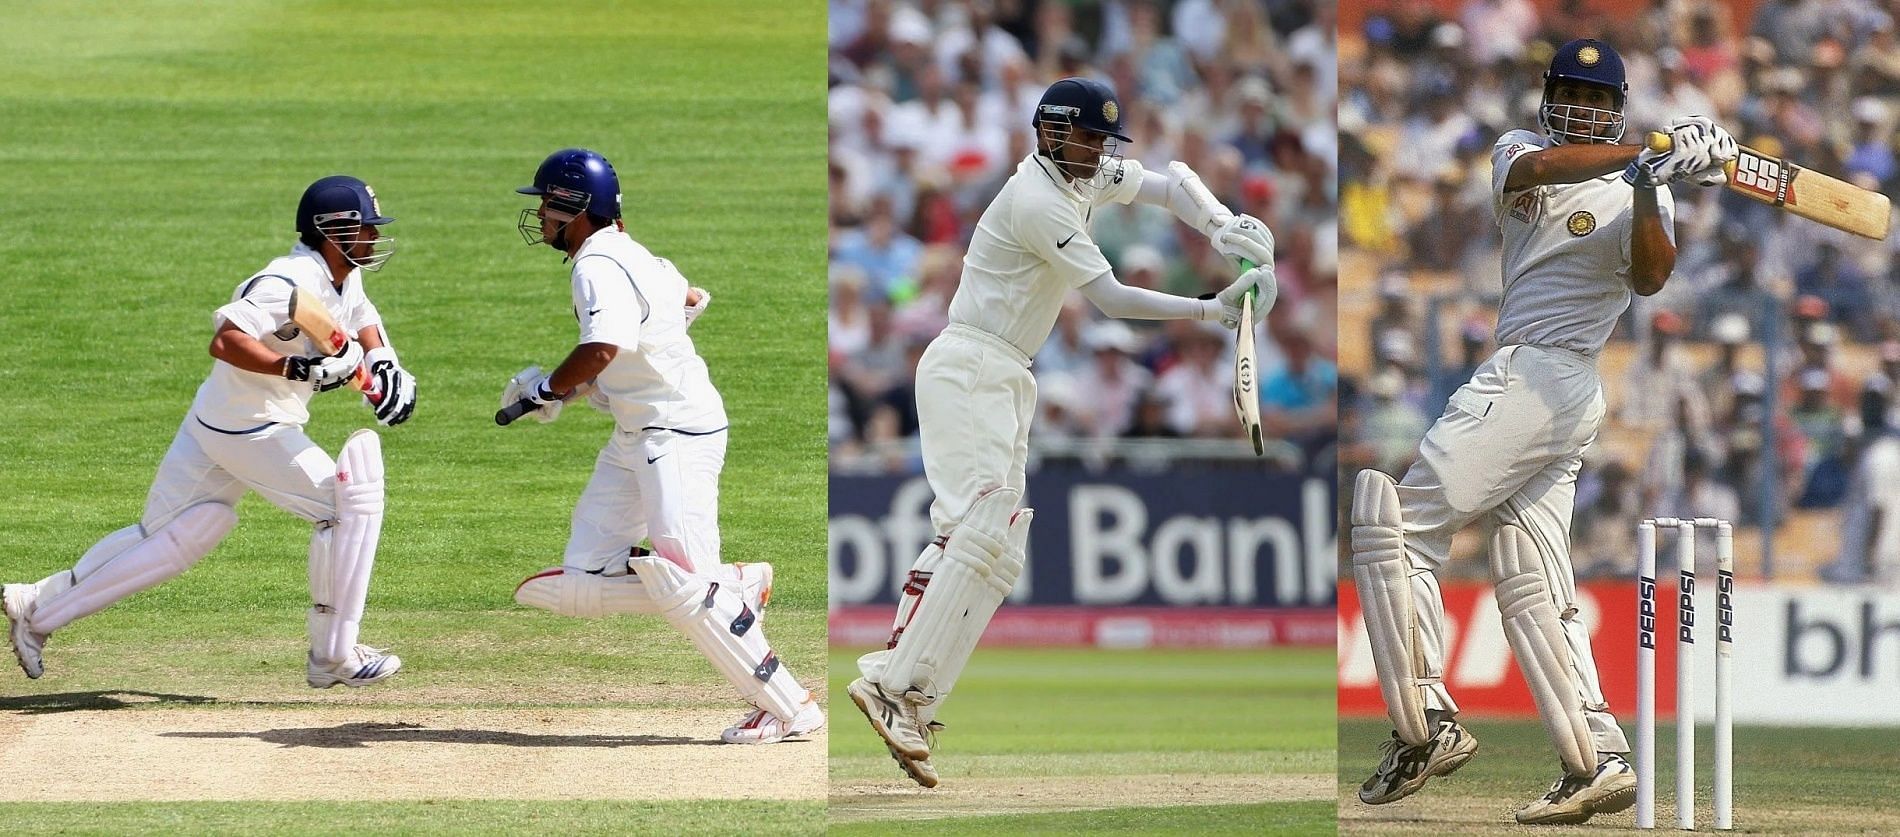 (L to R) The Fab 4 of Indian cricket. Sachin Tendulkar, Sourav Ganguly, Rahul Dravid and VVS Laxman. Pics: Getty Images